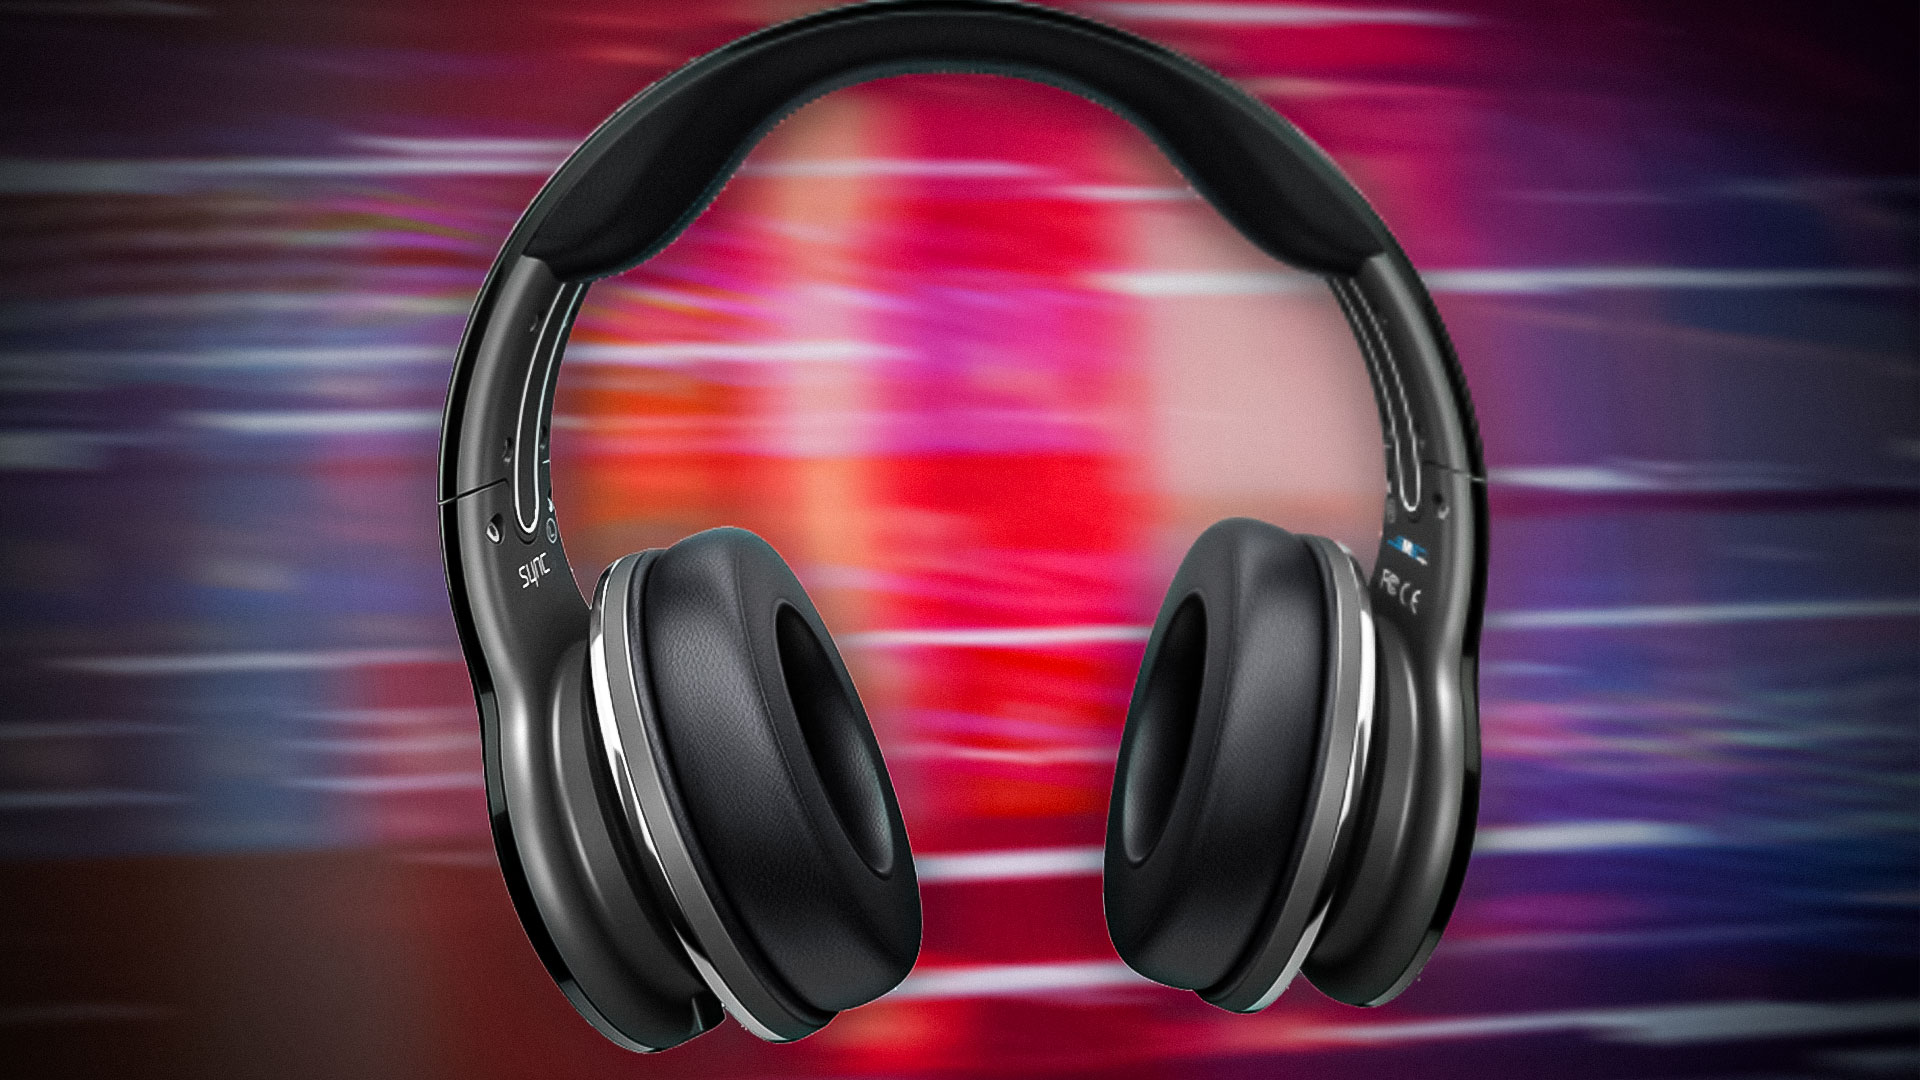 Headphone Crackling/Muffled/Distorted Audio Issue